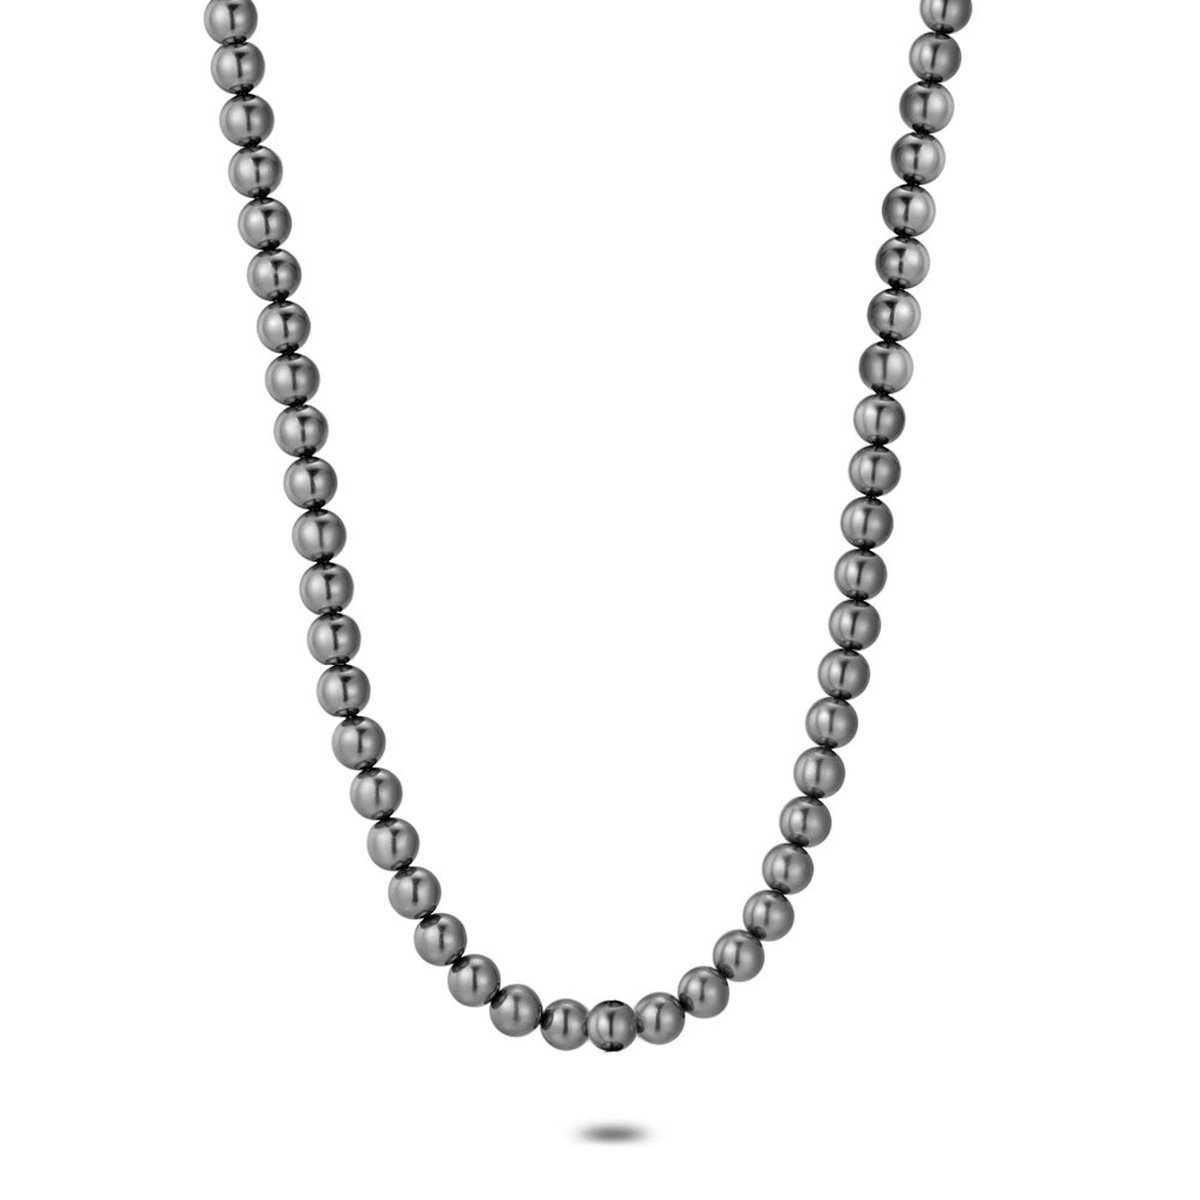 Twice As Nice Halsketting in zilver, grijze parels, 8 mm 50 cm+5 cm